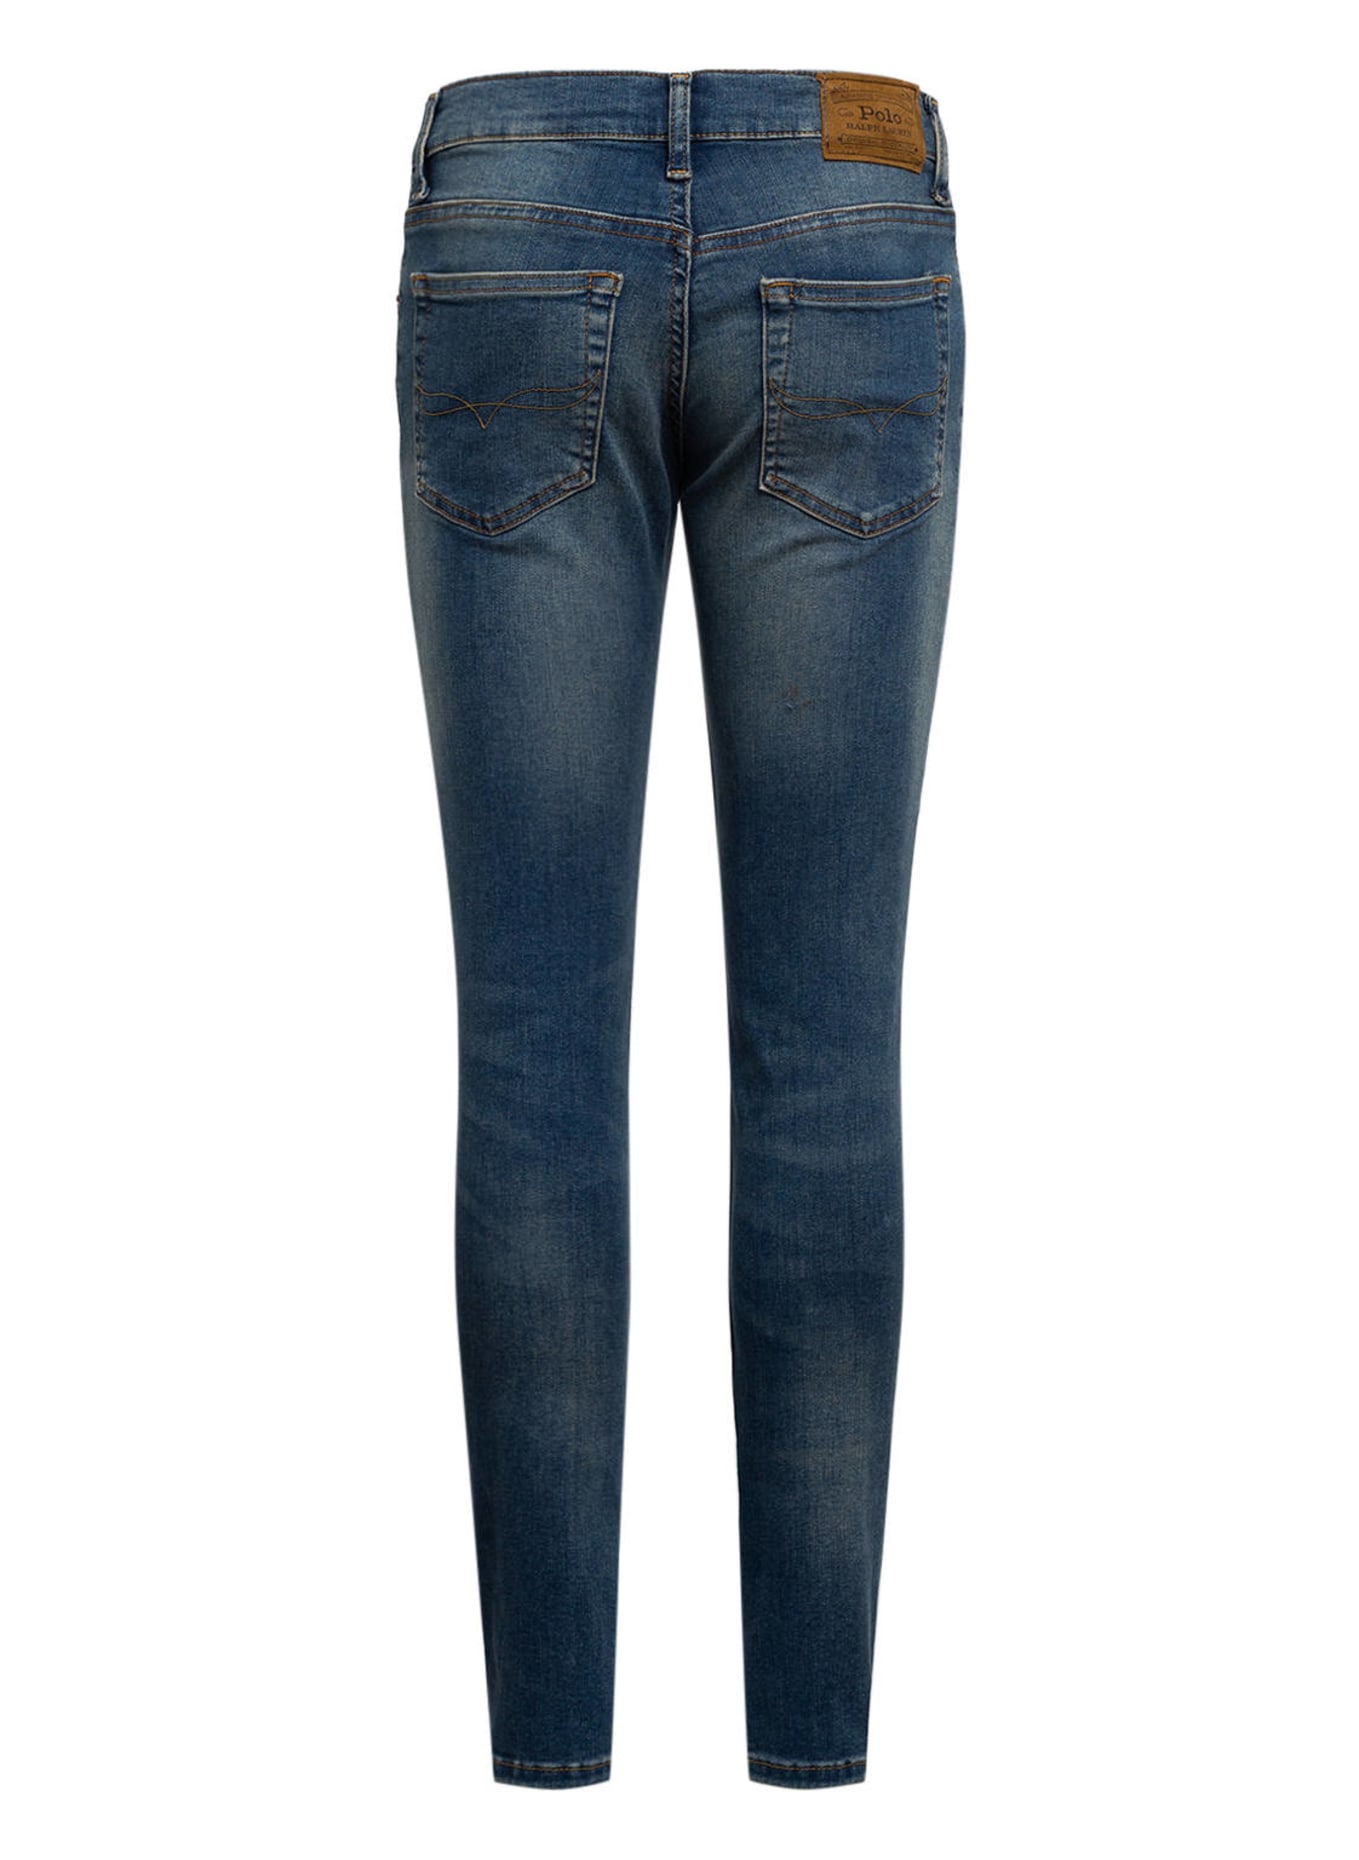 POLO RALPH LAUREN Jeans ELDRIDGE Skinny Fit, Farbe: 001 AIDEN WASH (Bild 2)